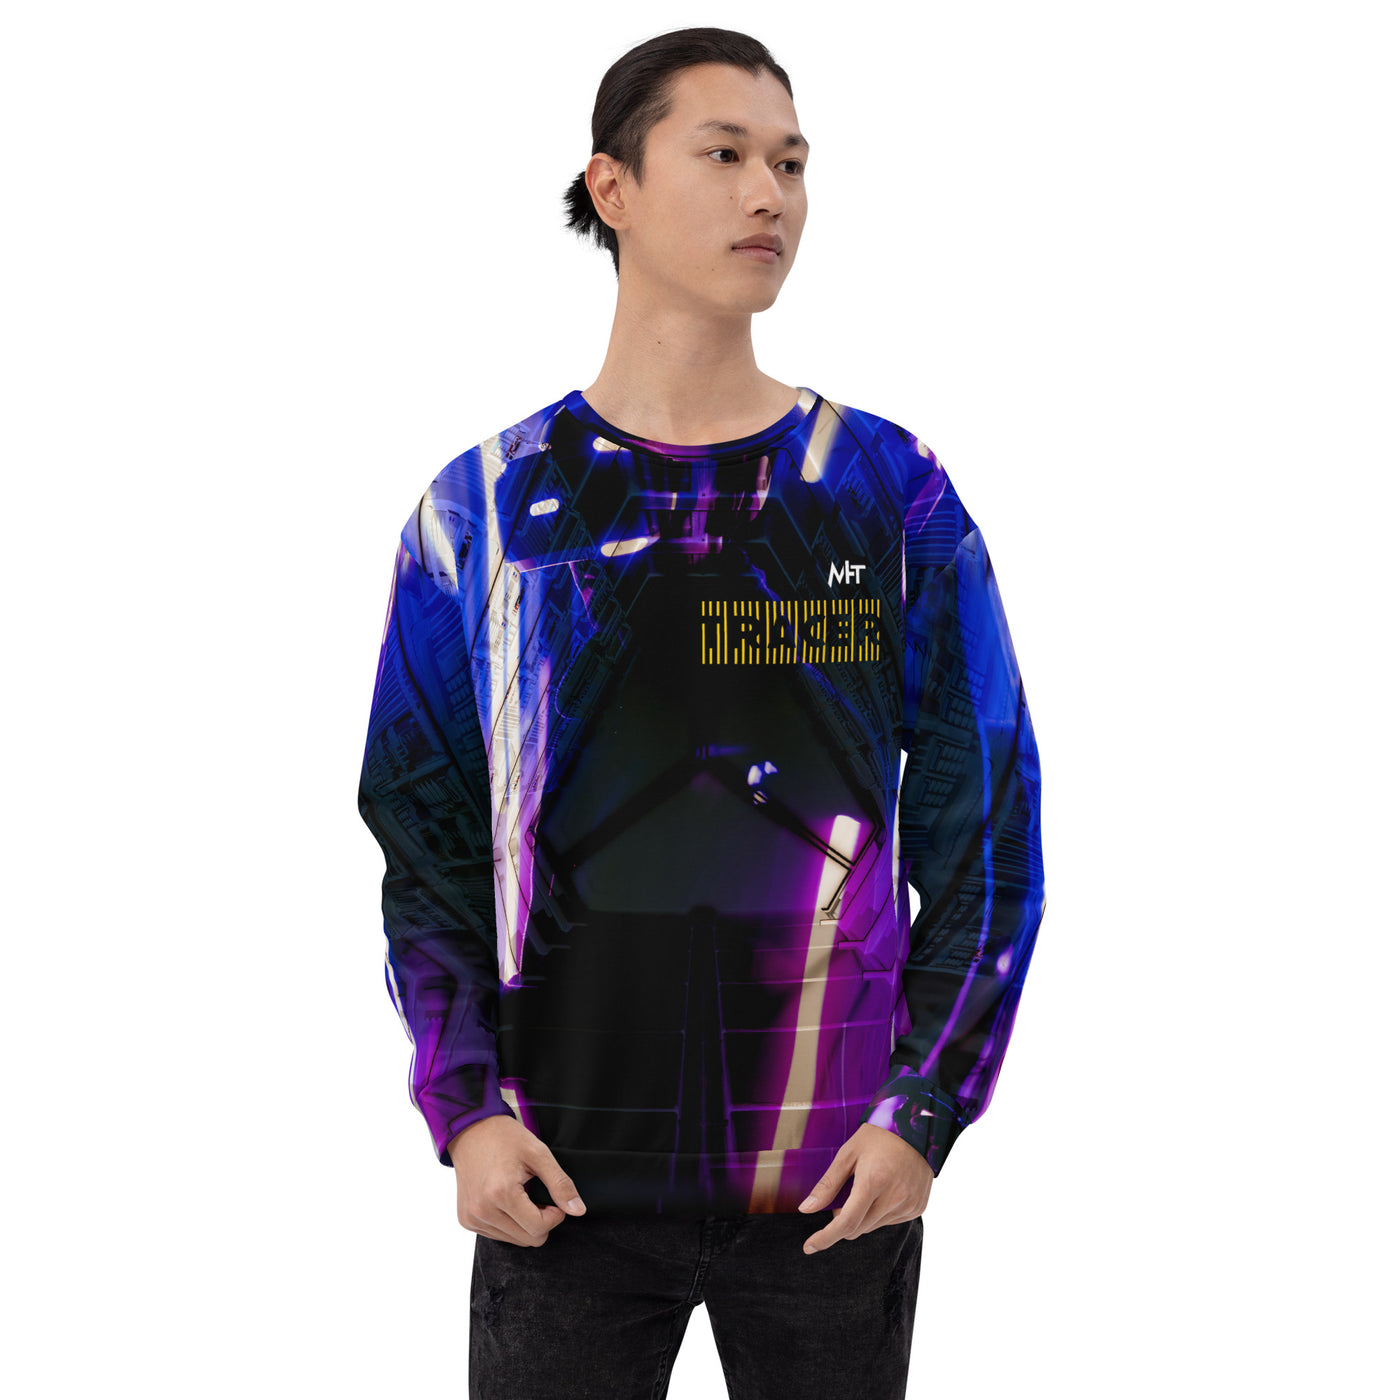 Cyberware - Tracer - Unisex Sweatshirt